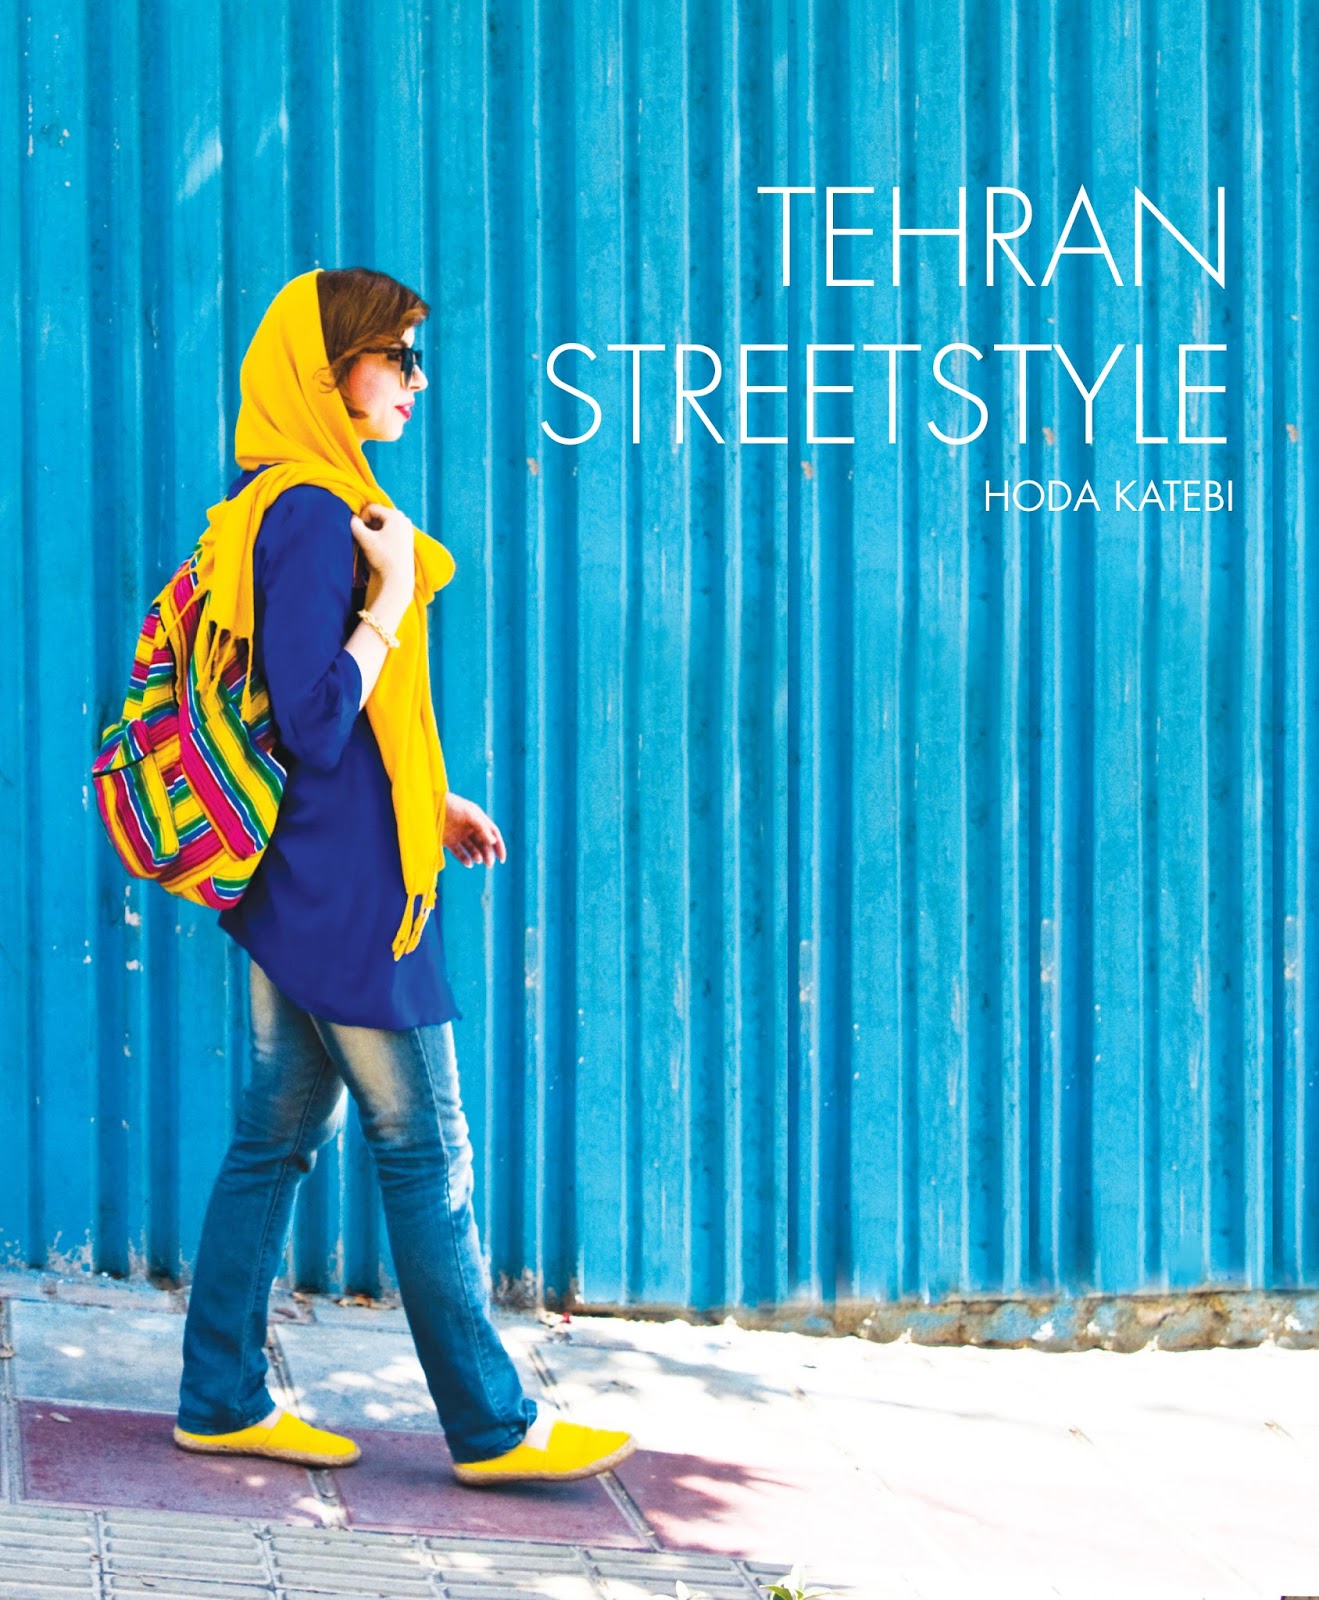 Tehran-Streetstyle-Hoda-Katebi